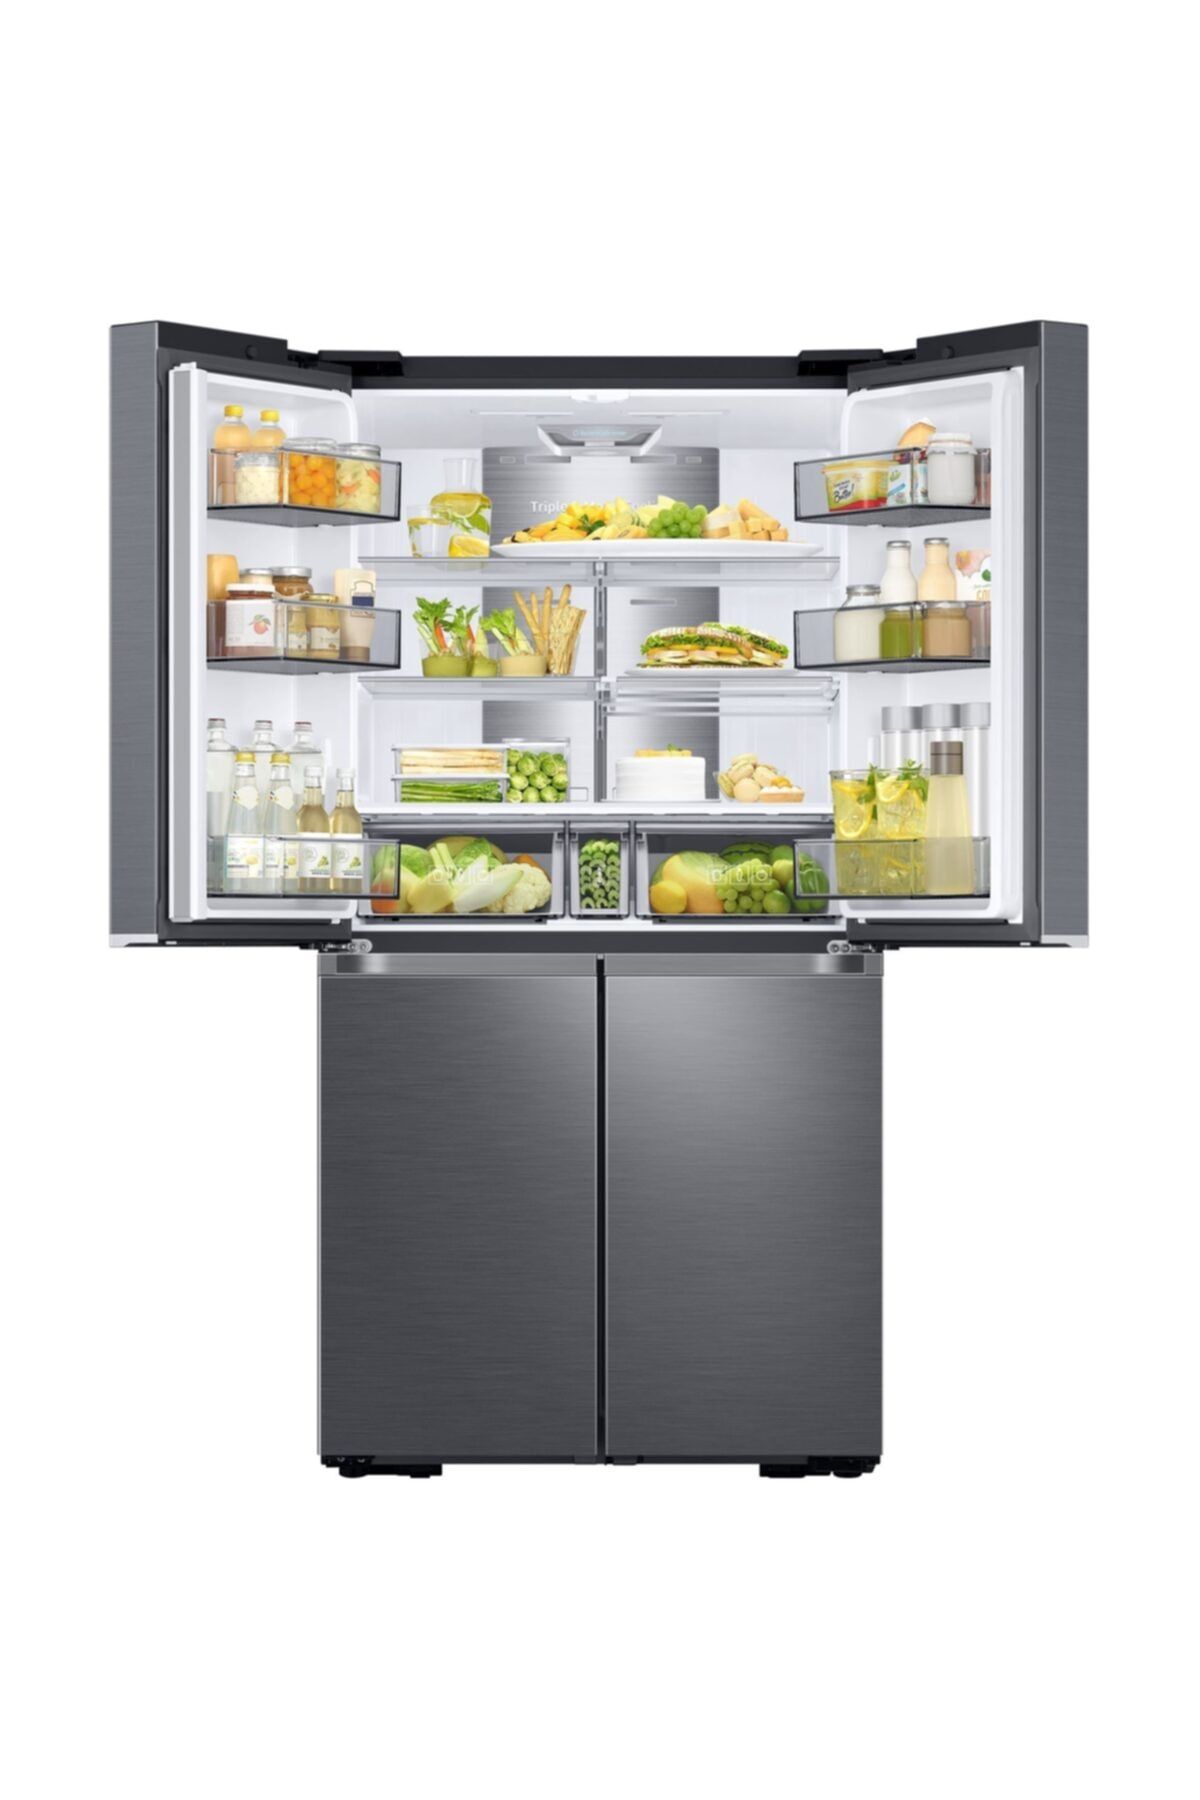 Холодильник eigen stark rf32. Холодильник многодверный Samsung rf44a5002s9. Холодильник многодверный Samsung rf50n5861fg. Самсунг rf44a5002b1. Холодильник Samsung rf44a5002b1 WT.